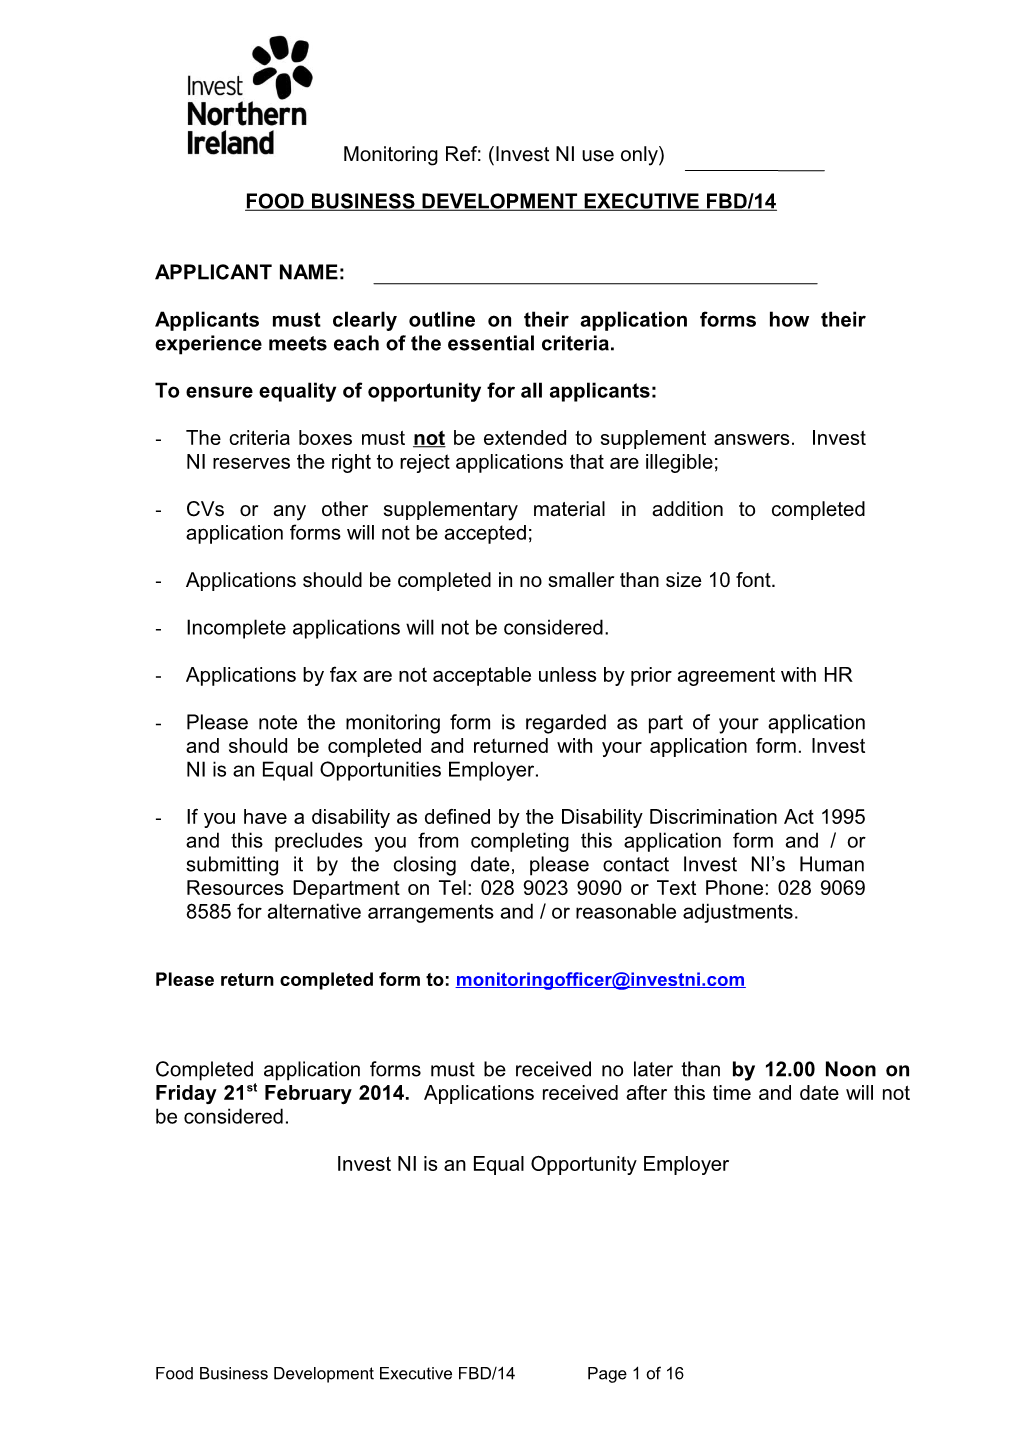 Food Business Development Executive Application Form (DOC)